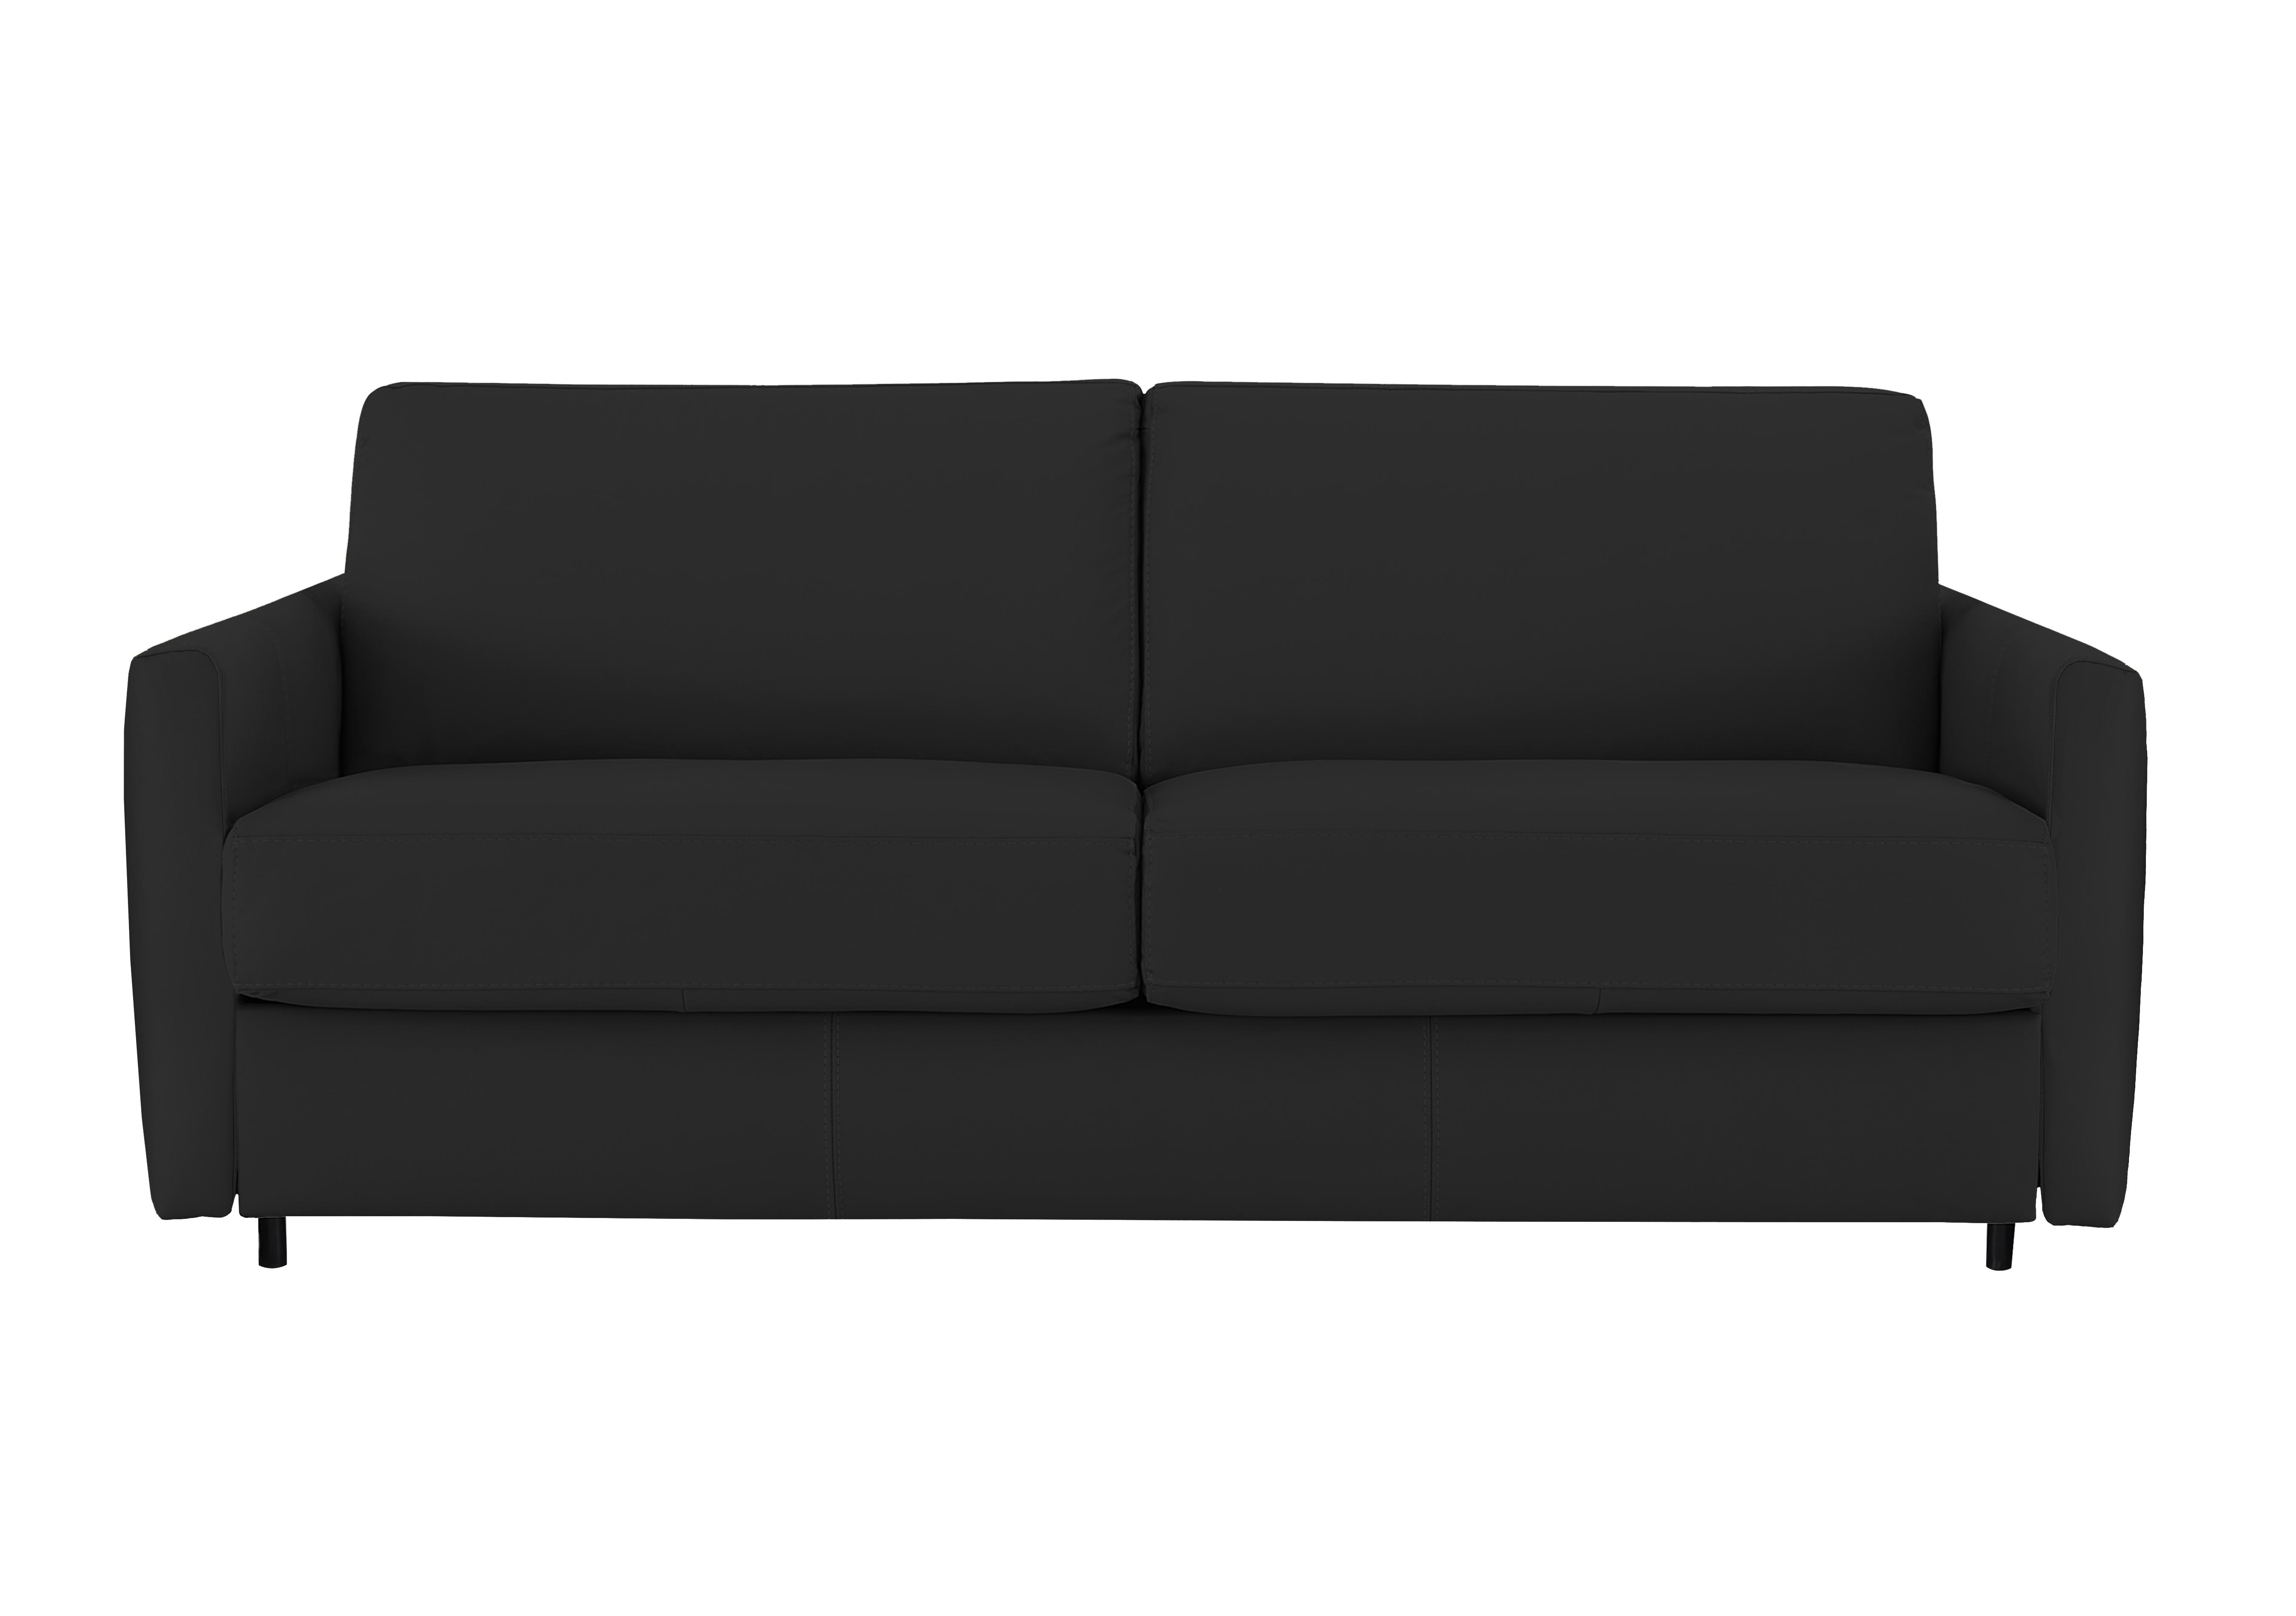 Alcova 3 Seater Leather Sofa Bed with Slim Arms in Torello Nero 71 on Furniture Village